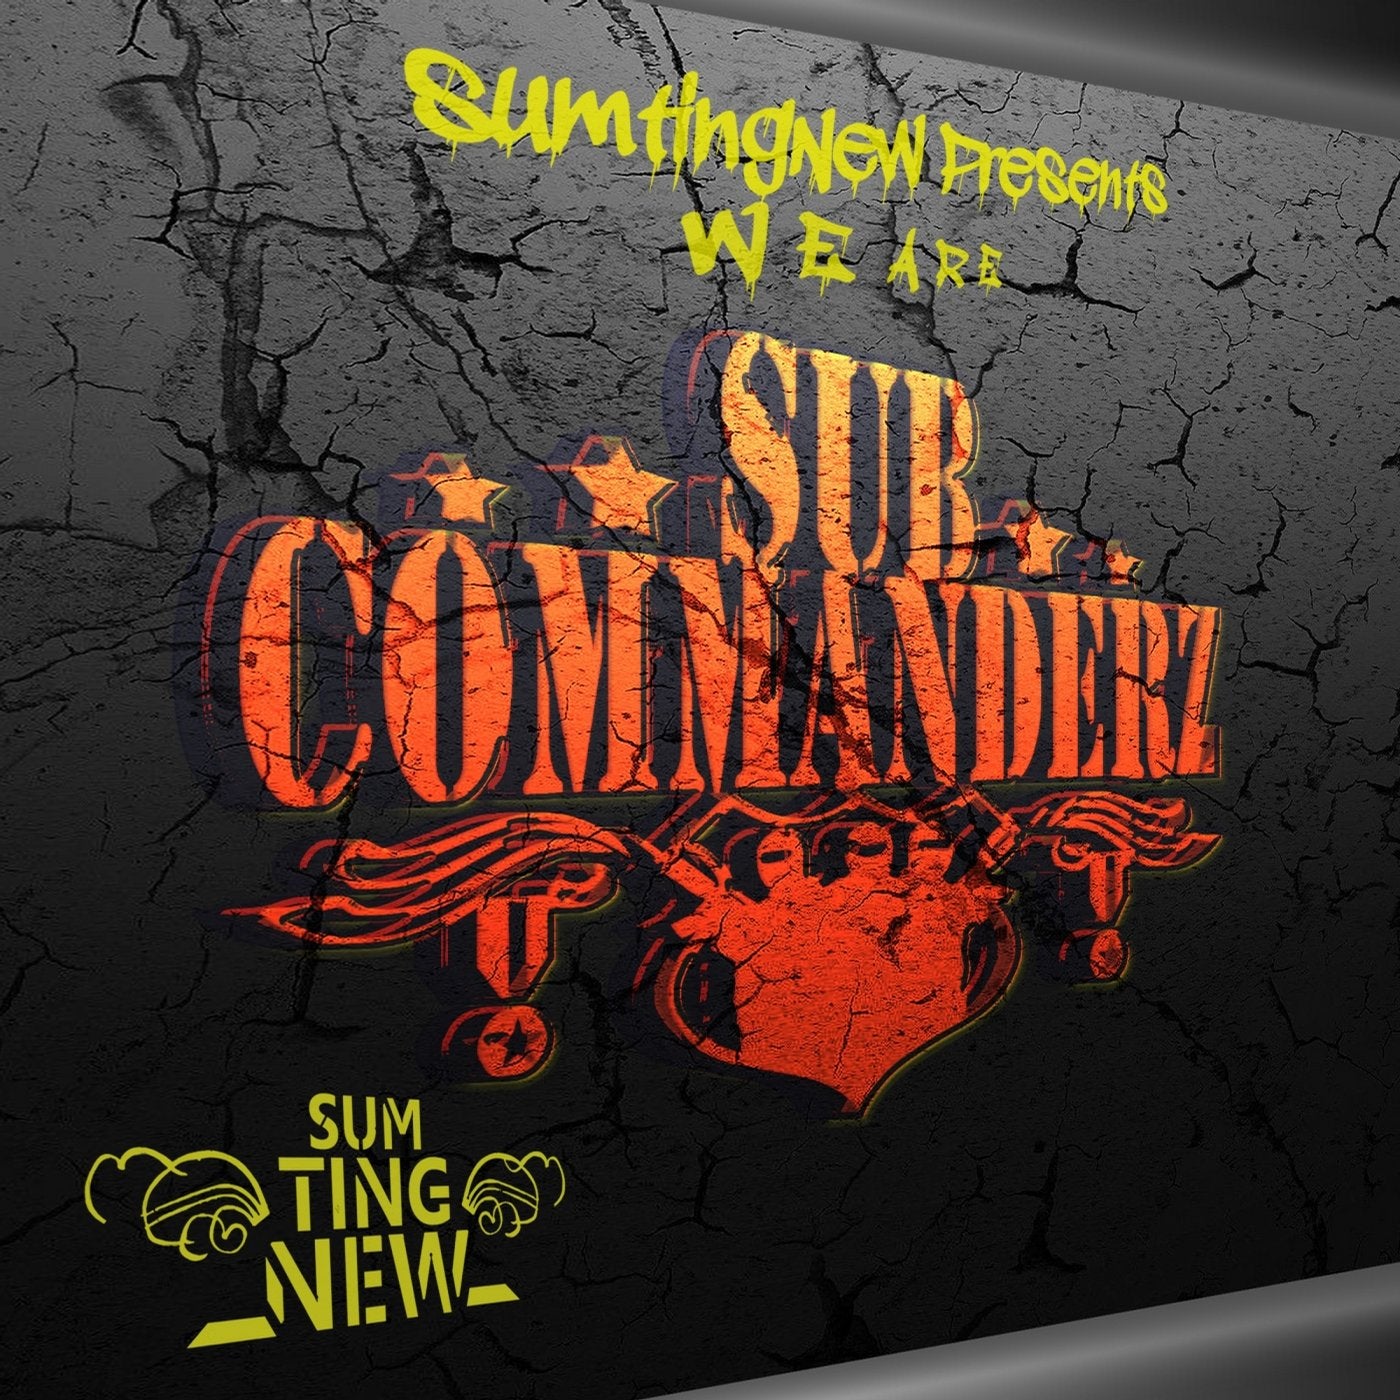 We Are Sub Commanderz